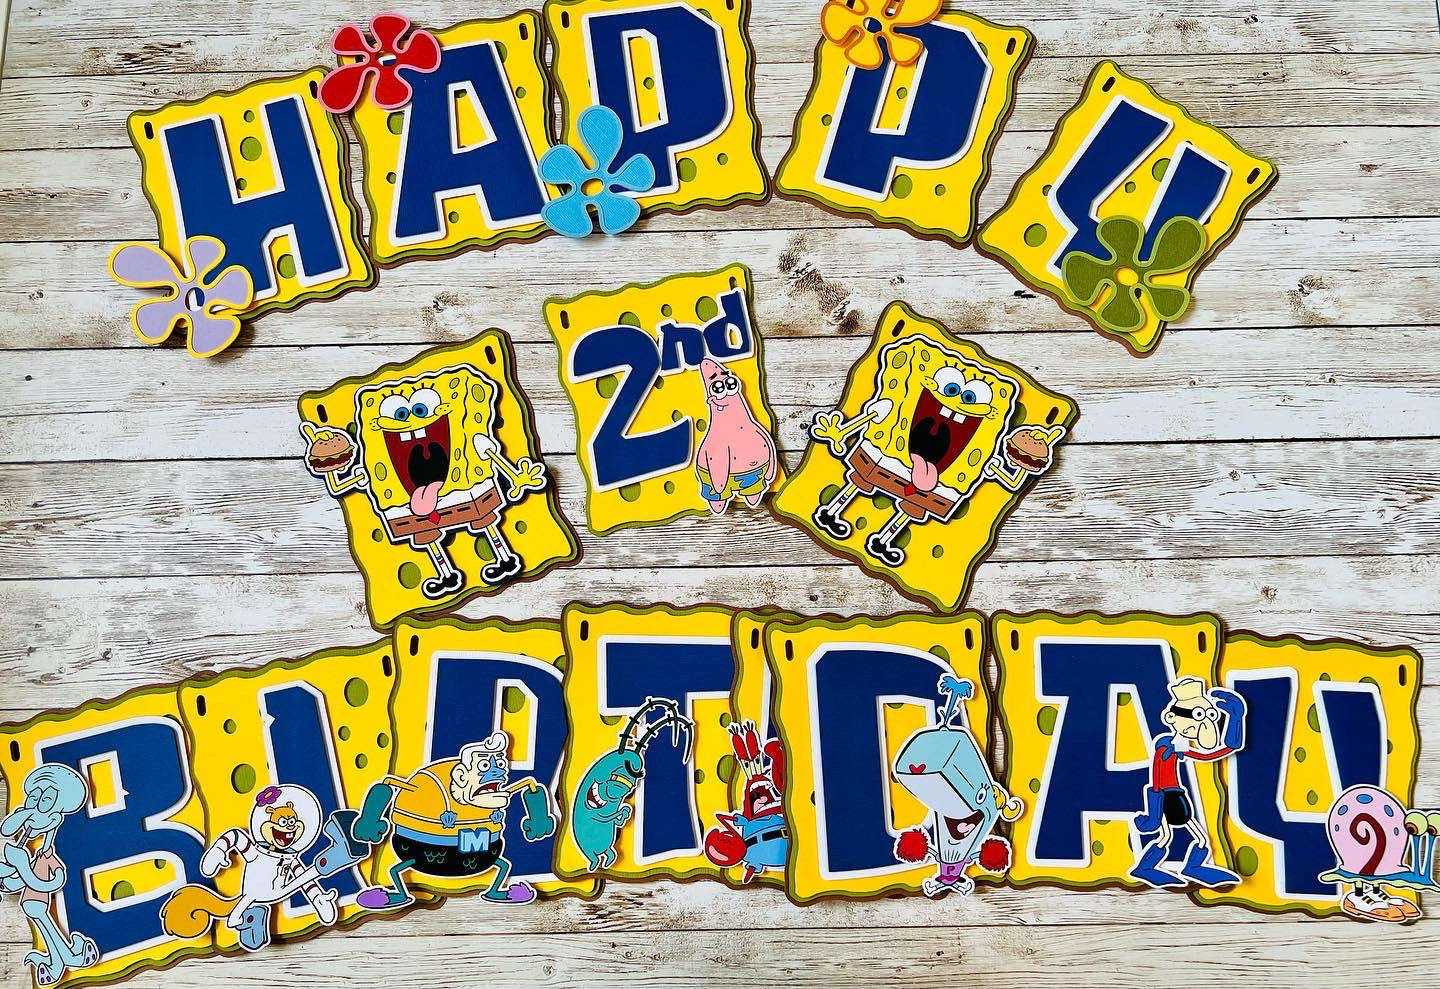 Spongebob Birthday Banner